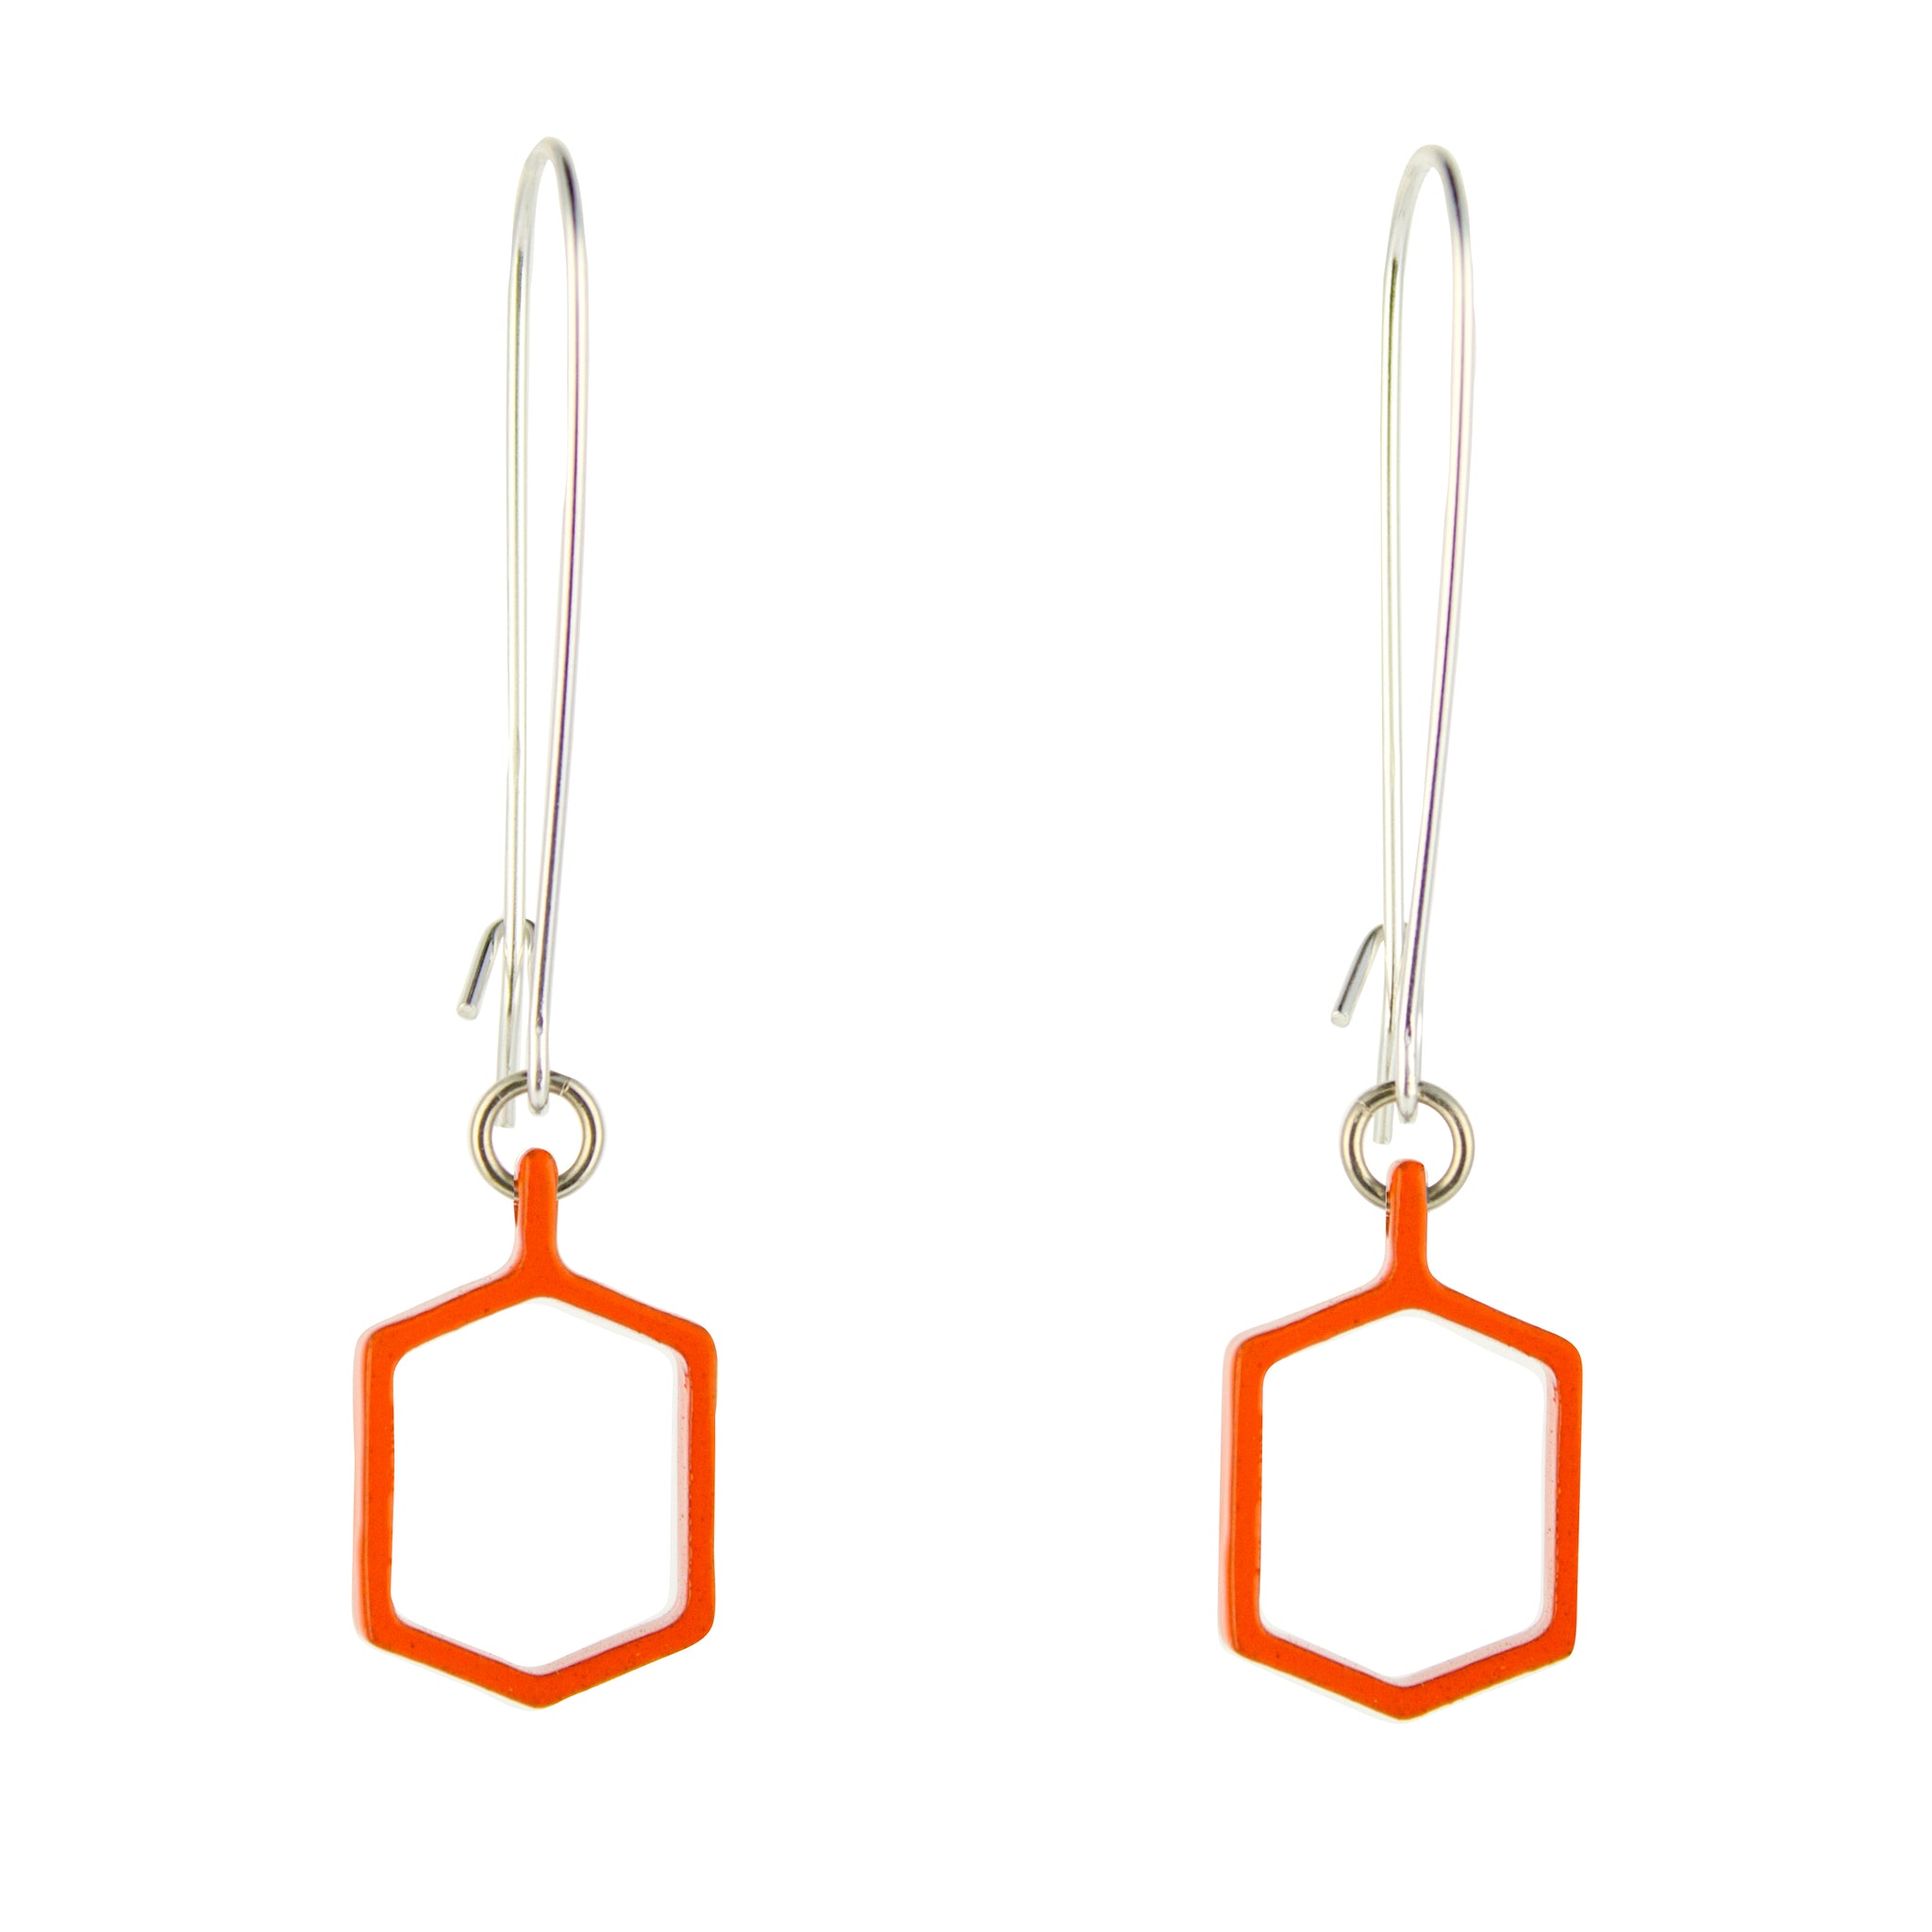 Vibrant_Orange - WITHIN x COMMON GROUND Jewelry Front View